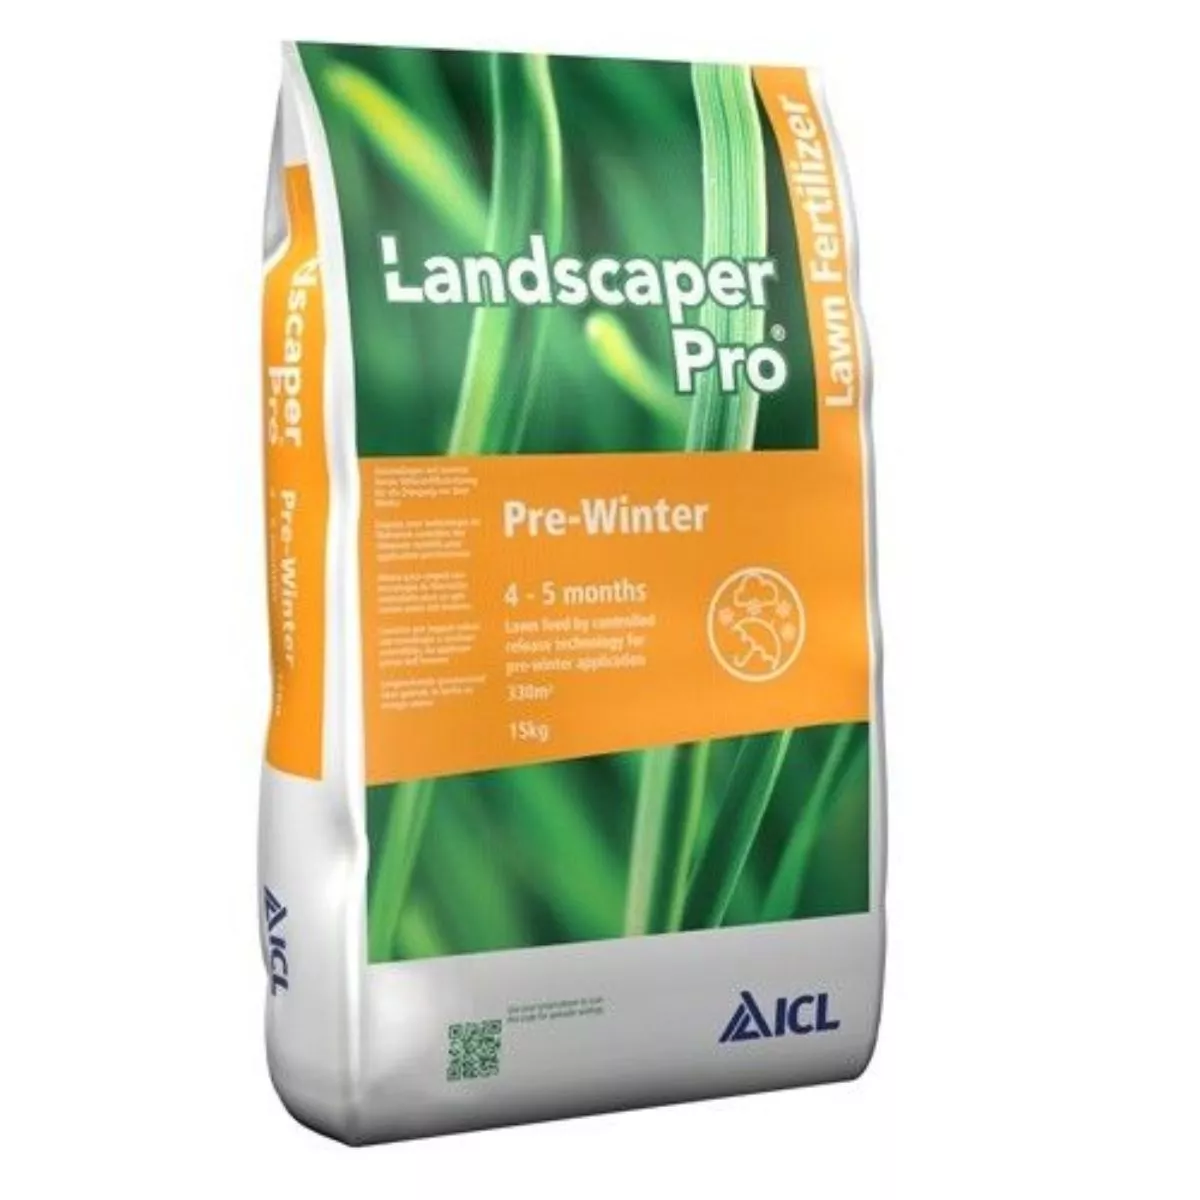 Ingrasamant Landscaper Pro PRE WINTER 4-5 luni 14+05+21+2MgO ICL Specialty Fertilizers (Everris International) 15 kg 1